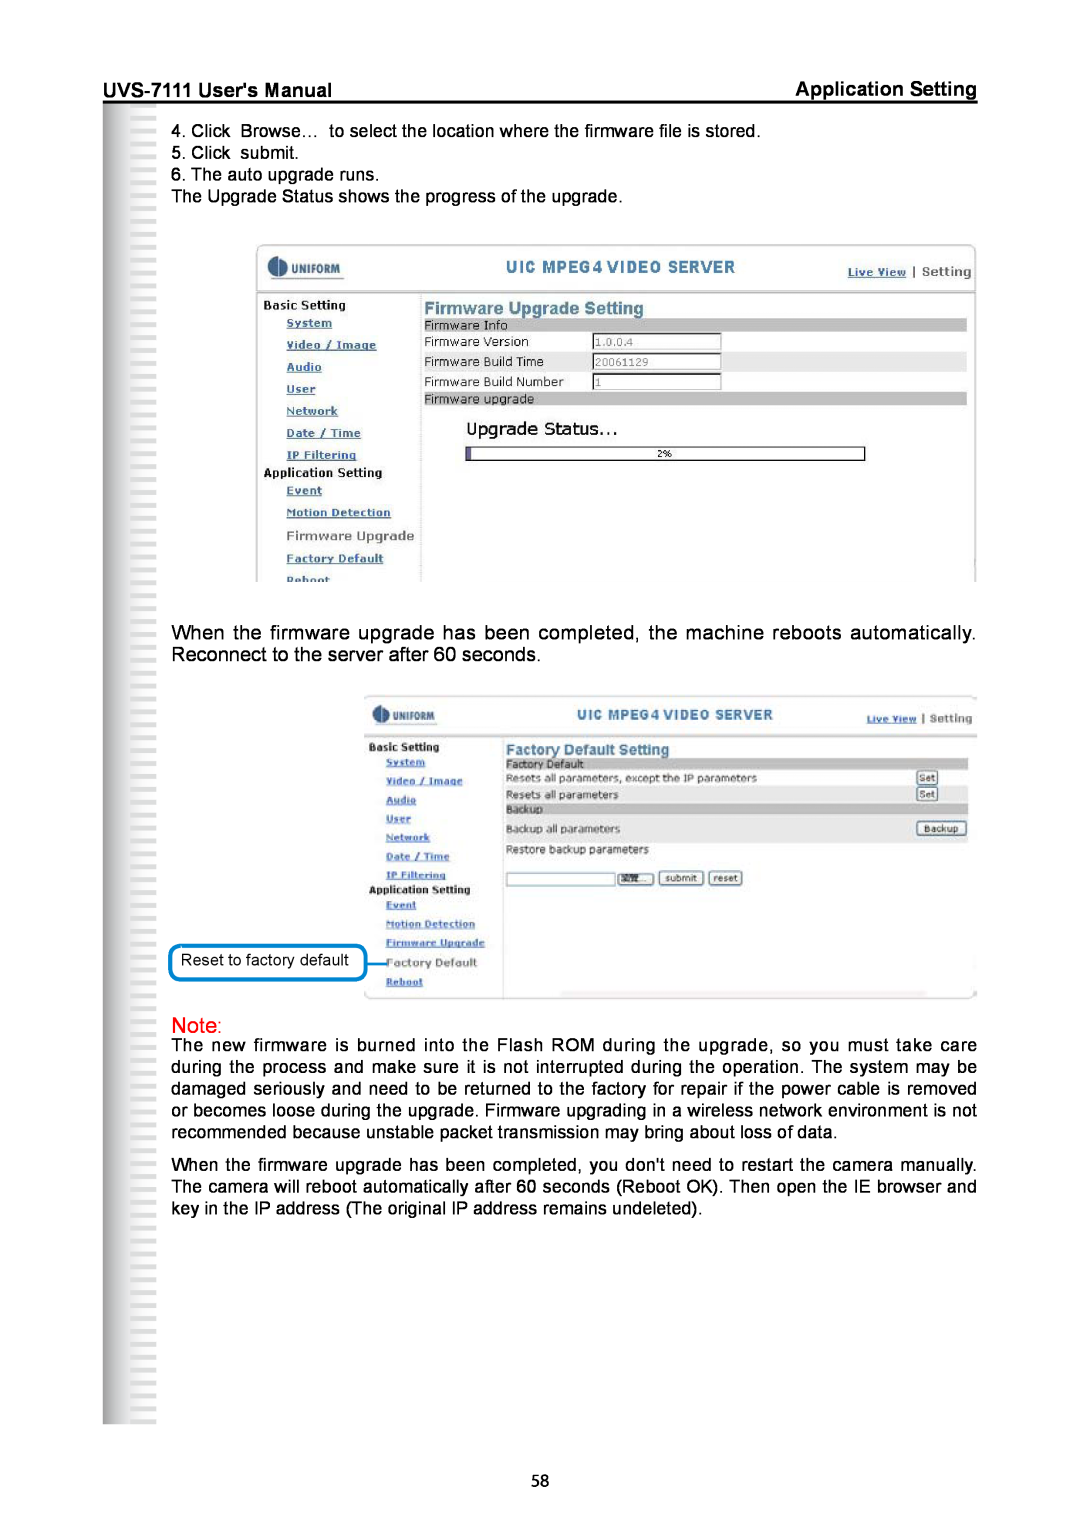 Active Thermal Management manual UVS-7111 Users Manual, Application Setting, Click 